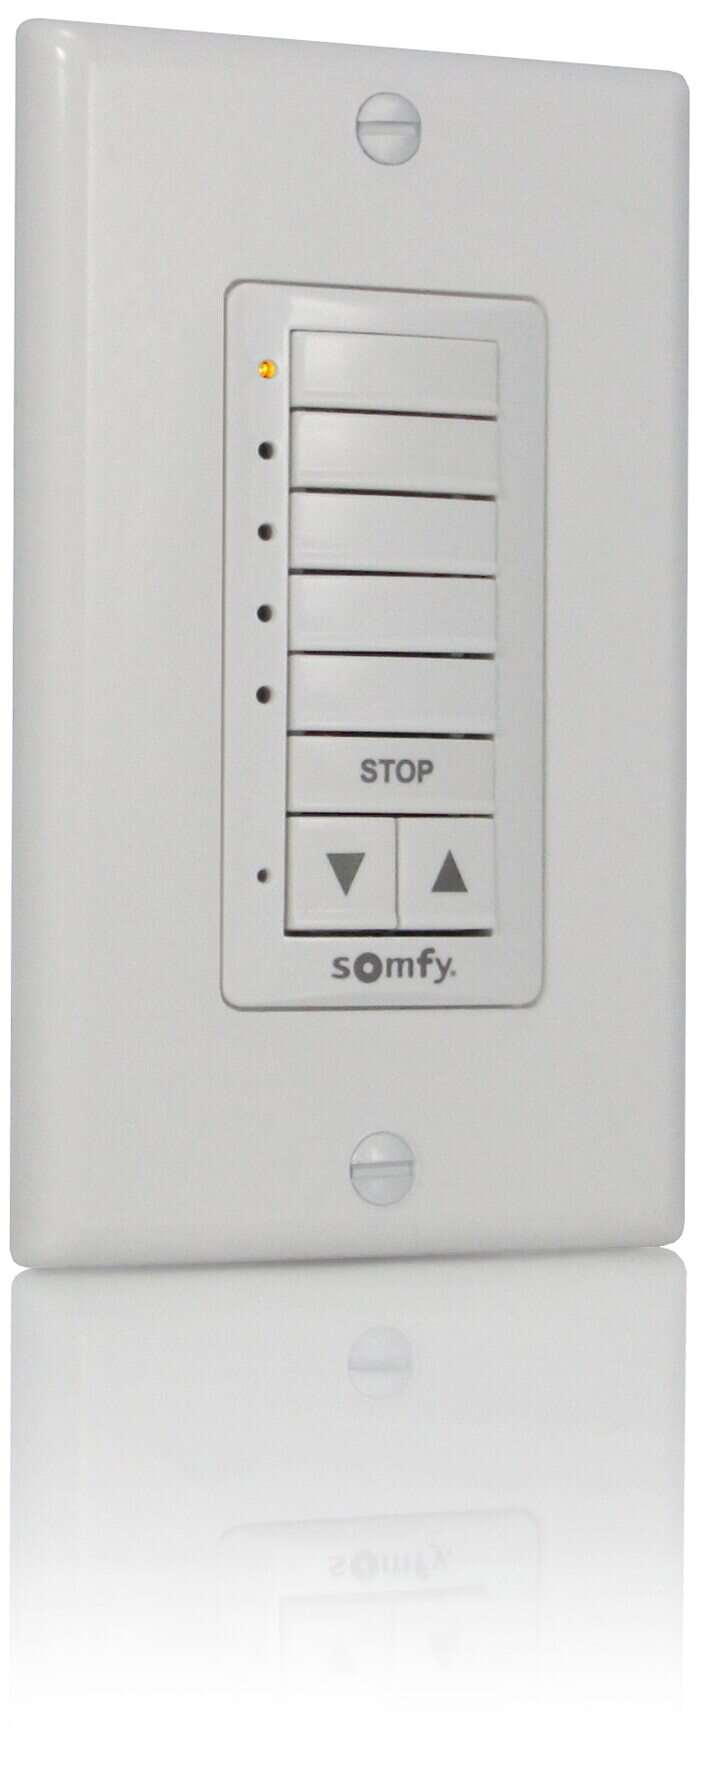 Somfy Decoflex Sujetadores RTS Interruptor de pared; 4 canal; Blanco MPN # 1811074 